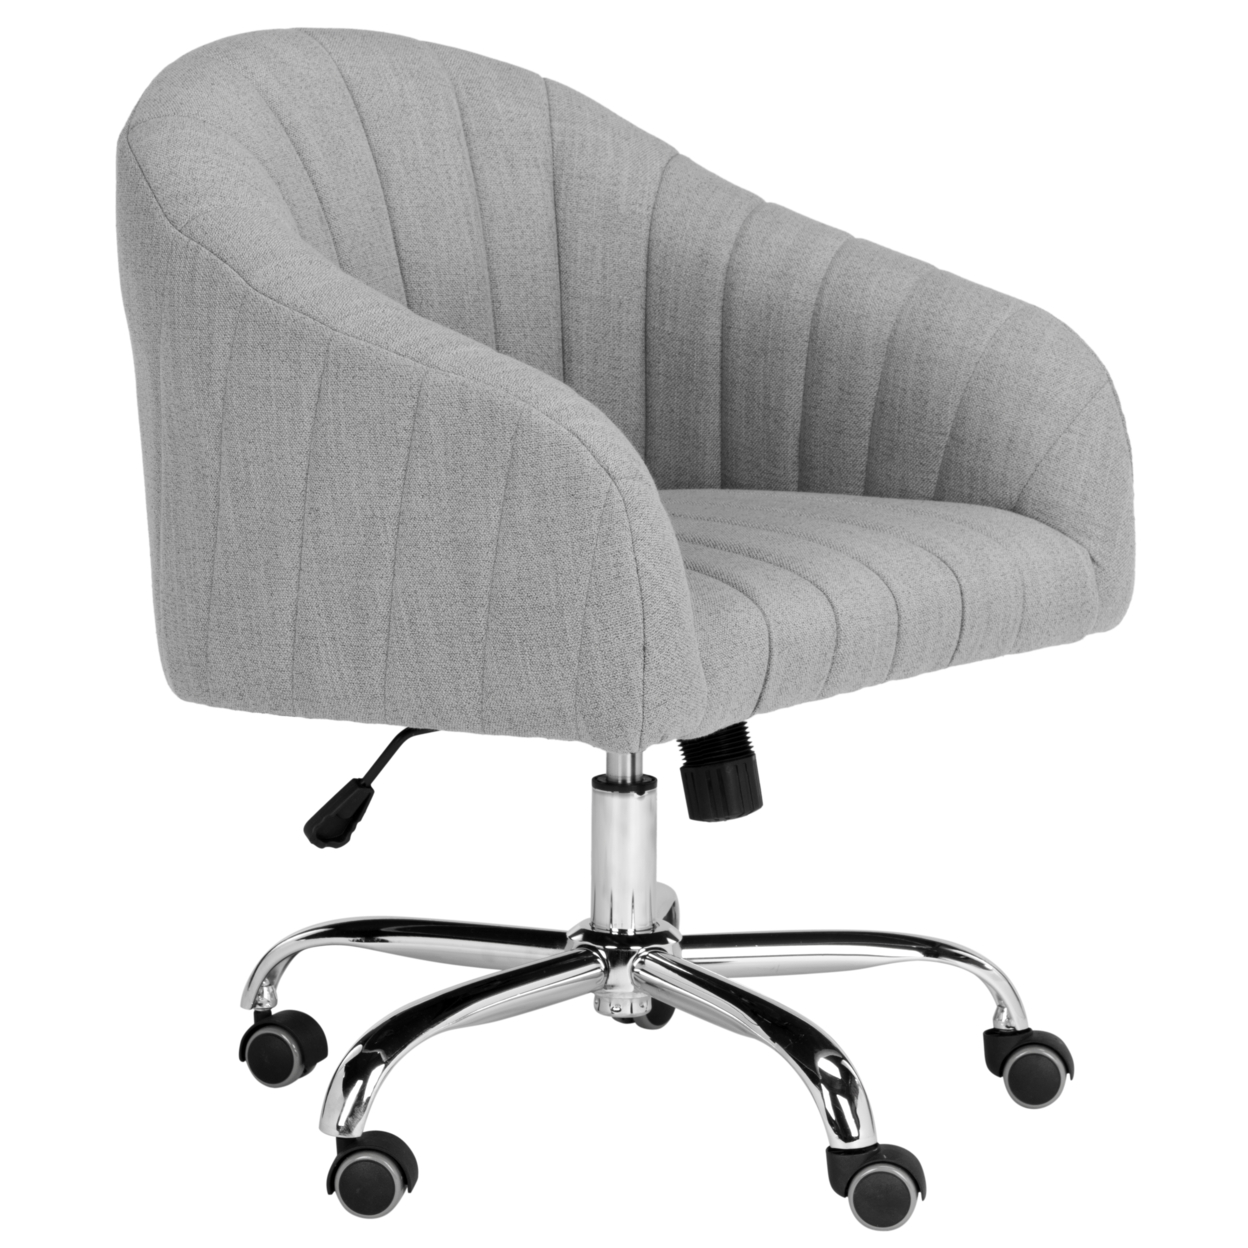 SAFAVIEH Themis Linen Chrome Leg Swivel Office Chair Grey / Chrome